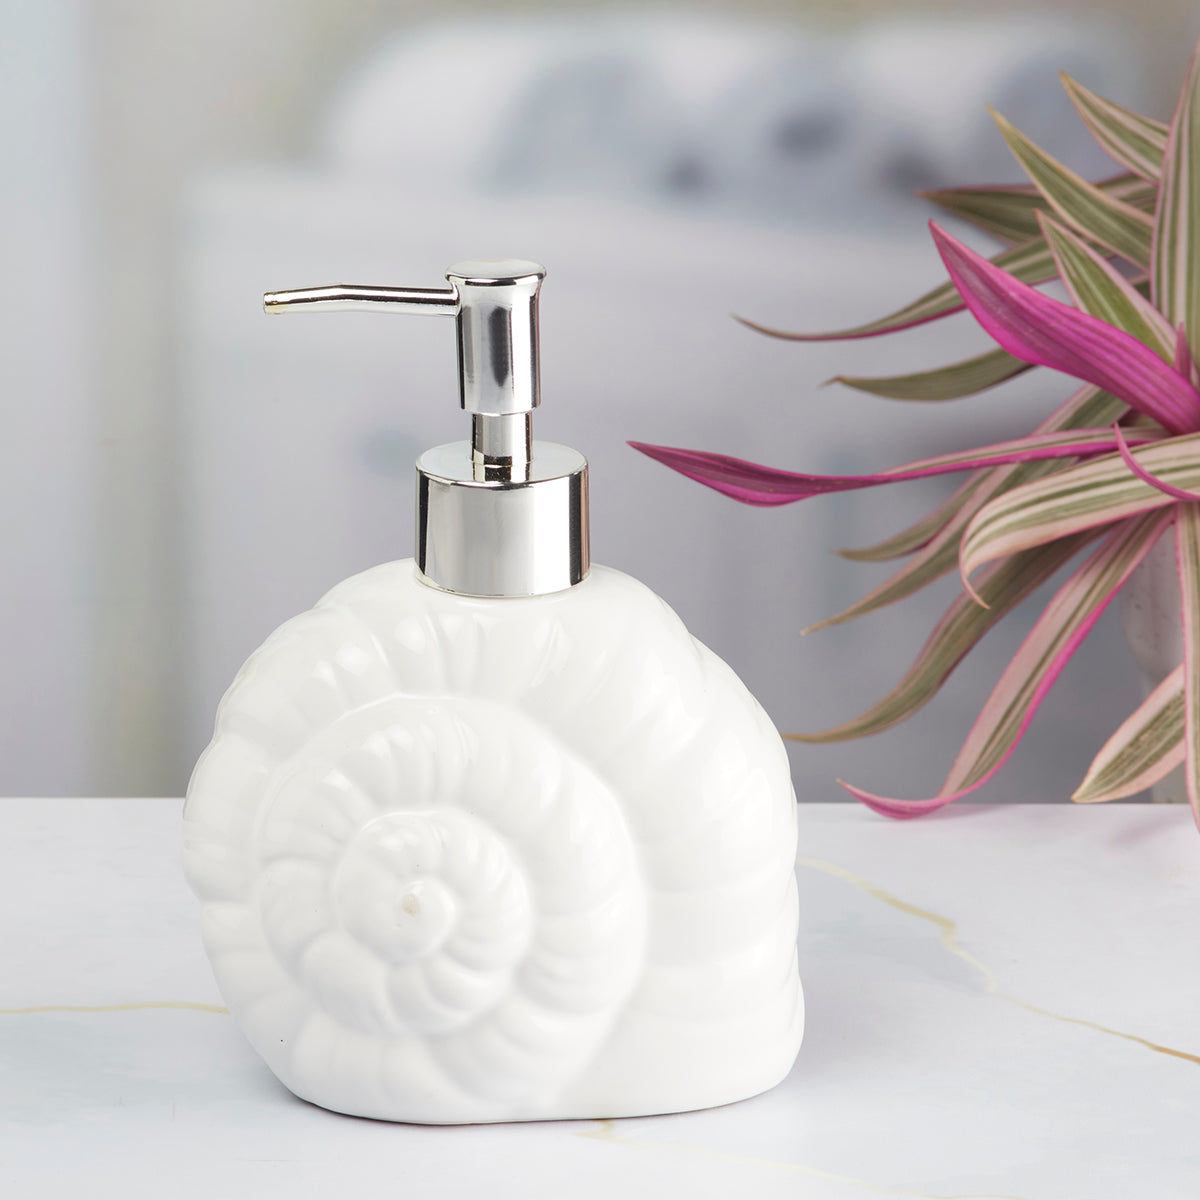 Ceramic Soap Dispenser handwash Pump for Bathroom, Set of 1, White (8462)